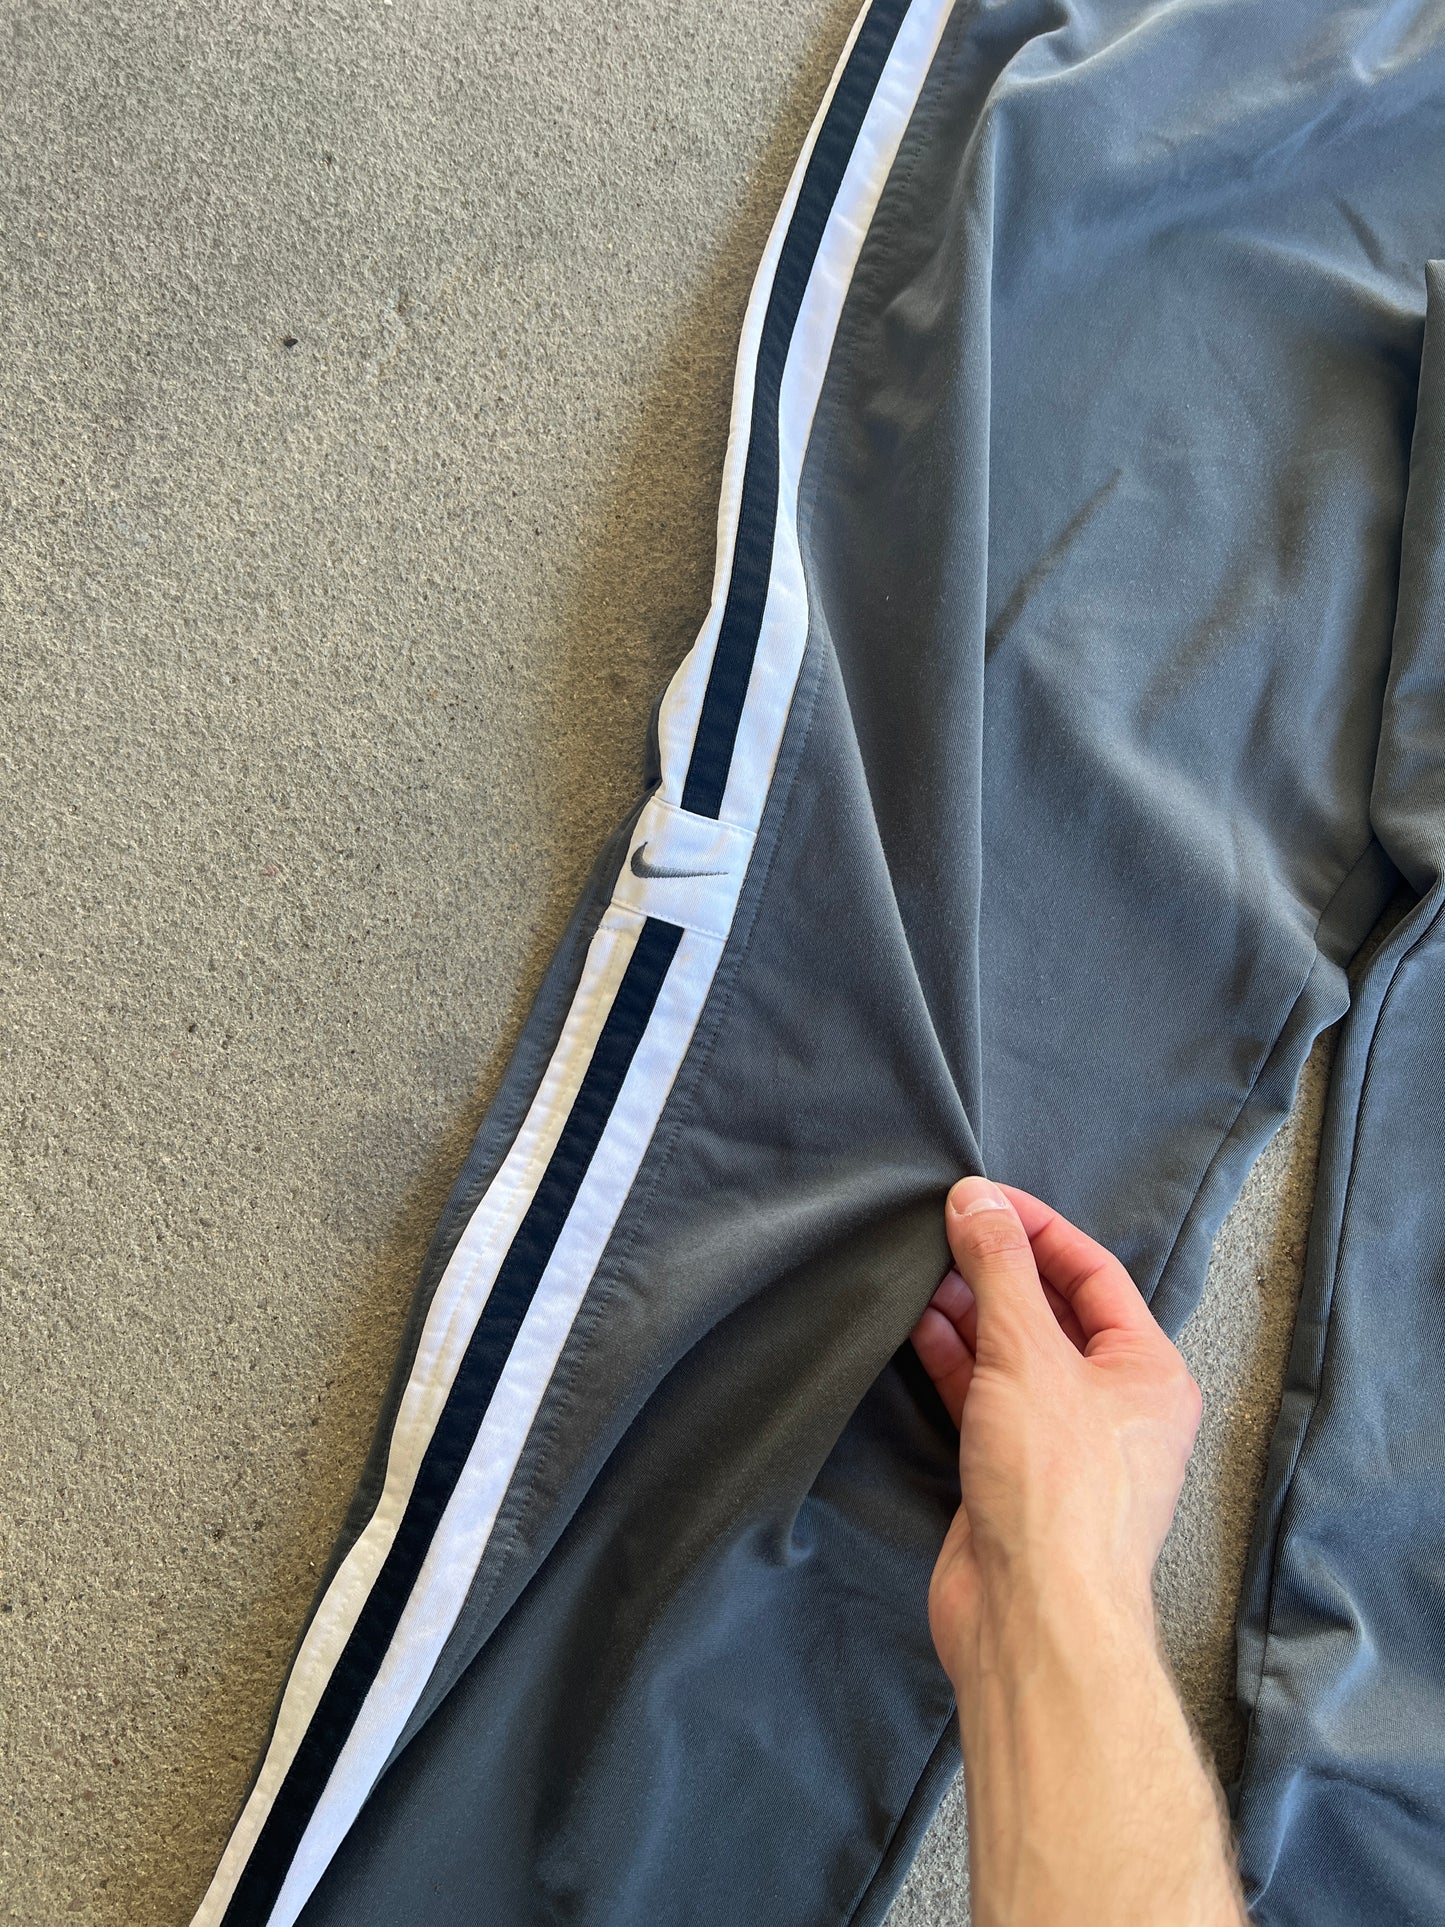 Vintage Stripped Nike Track Pants - XL